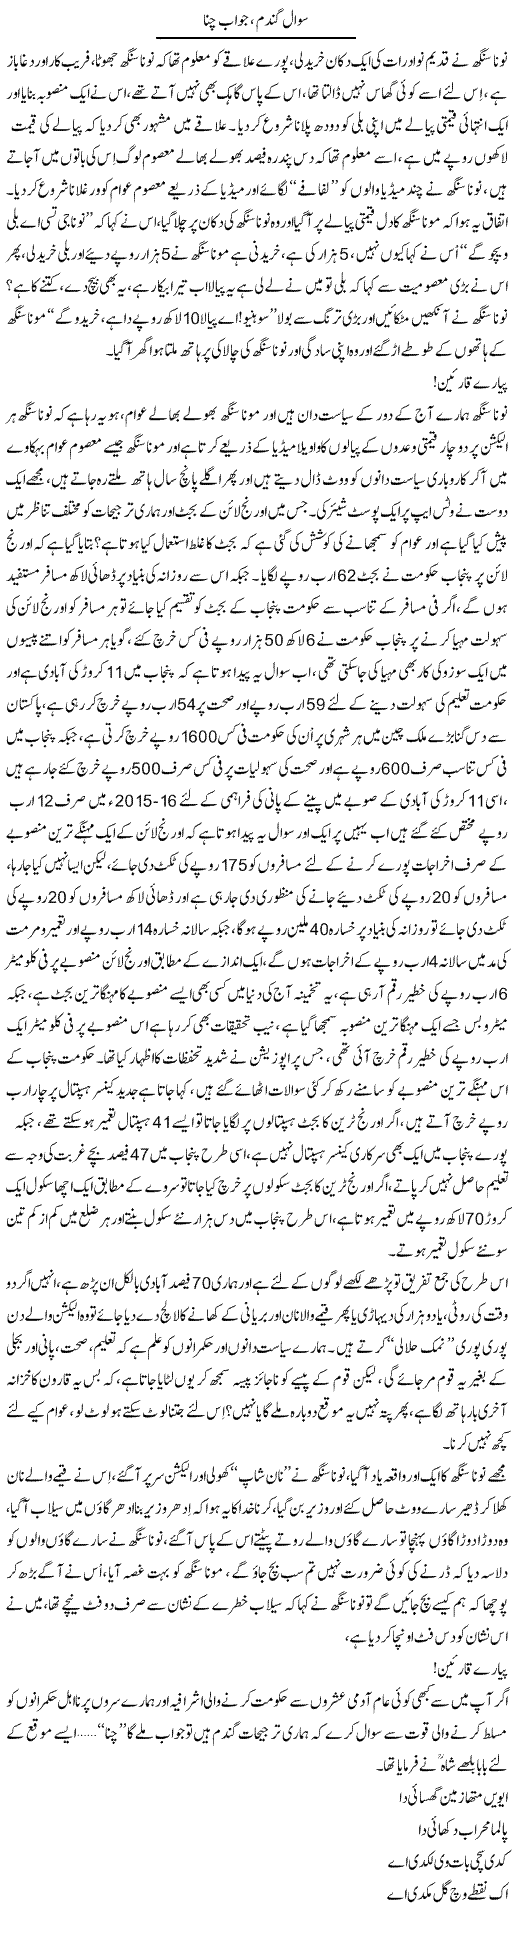 Sawal Gandum, Jawab Chana | Nadeem Chaudhry | Daily Urdu Columns